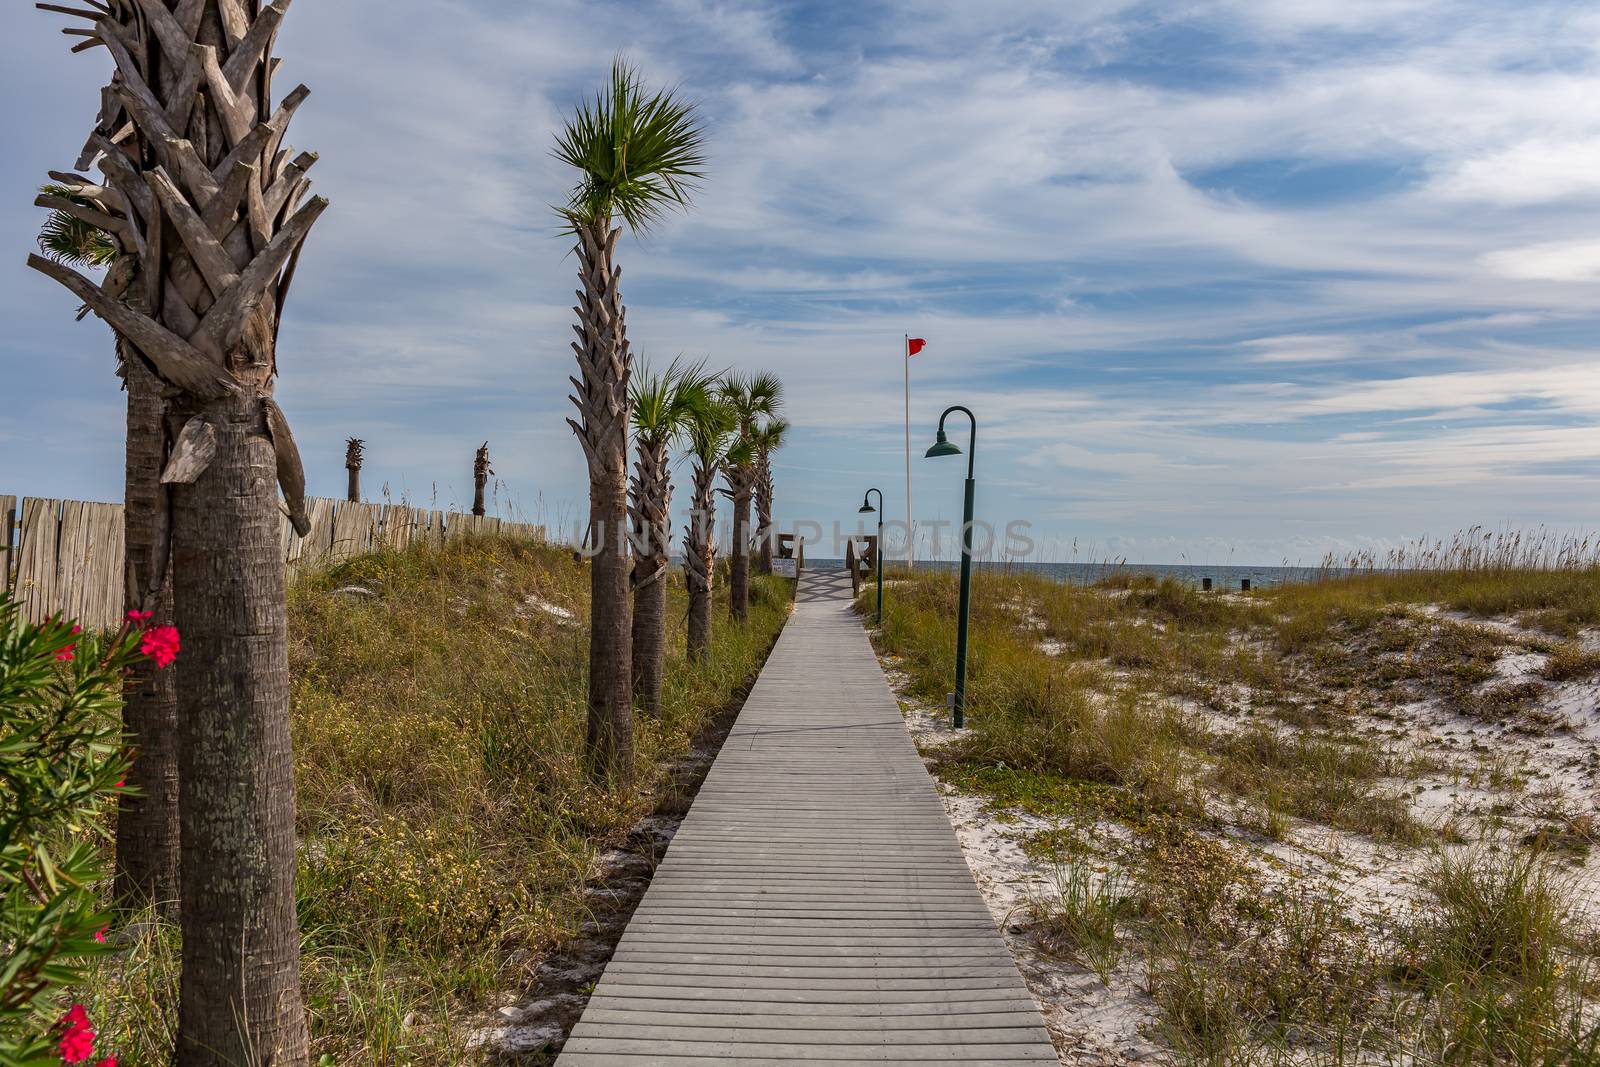 Boardwalk to the Beach by adifferentbrian